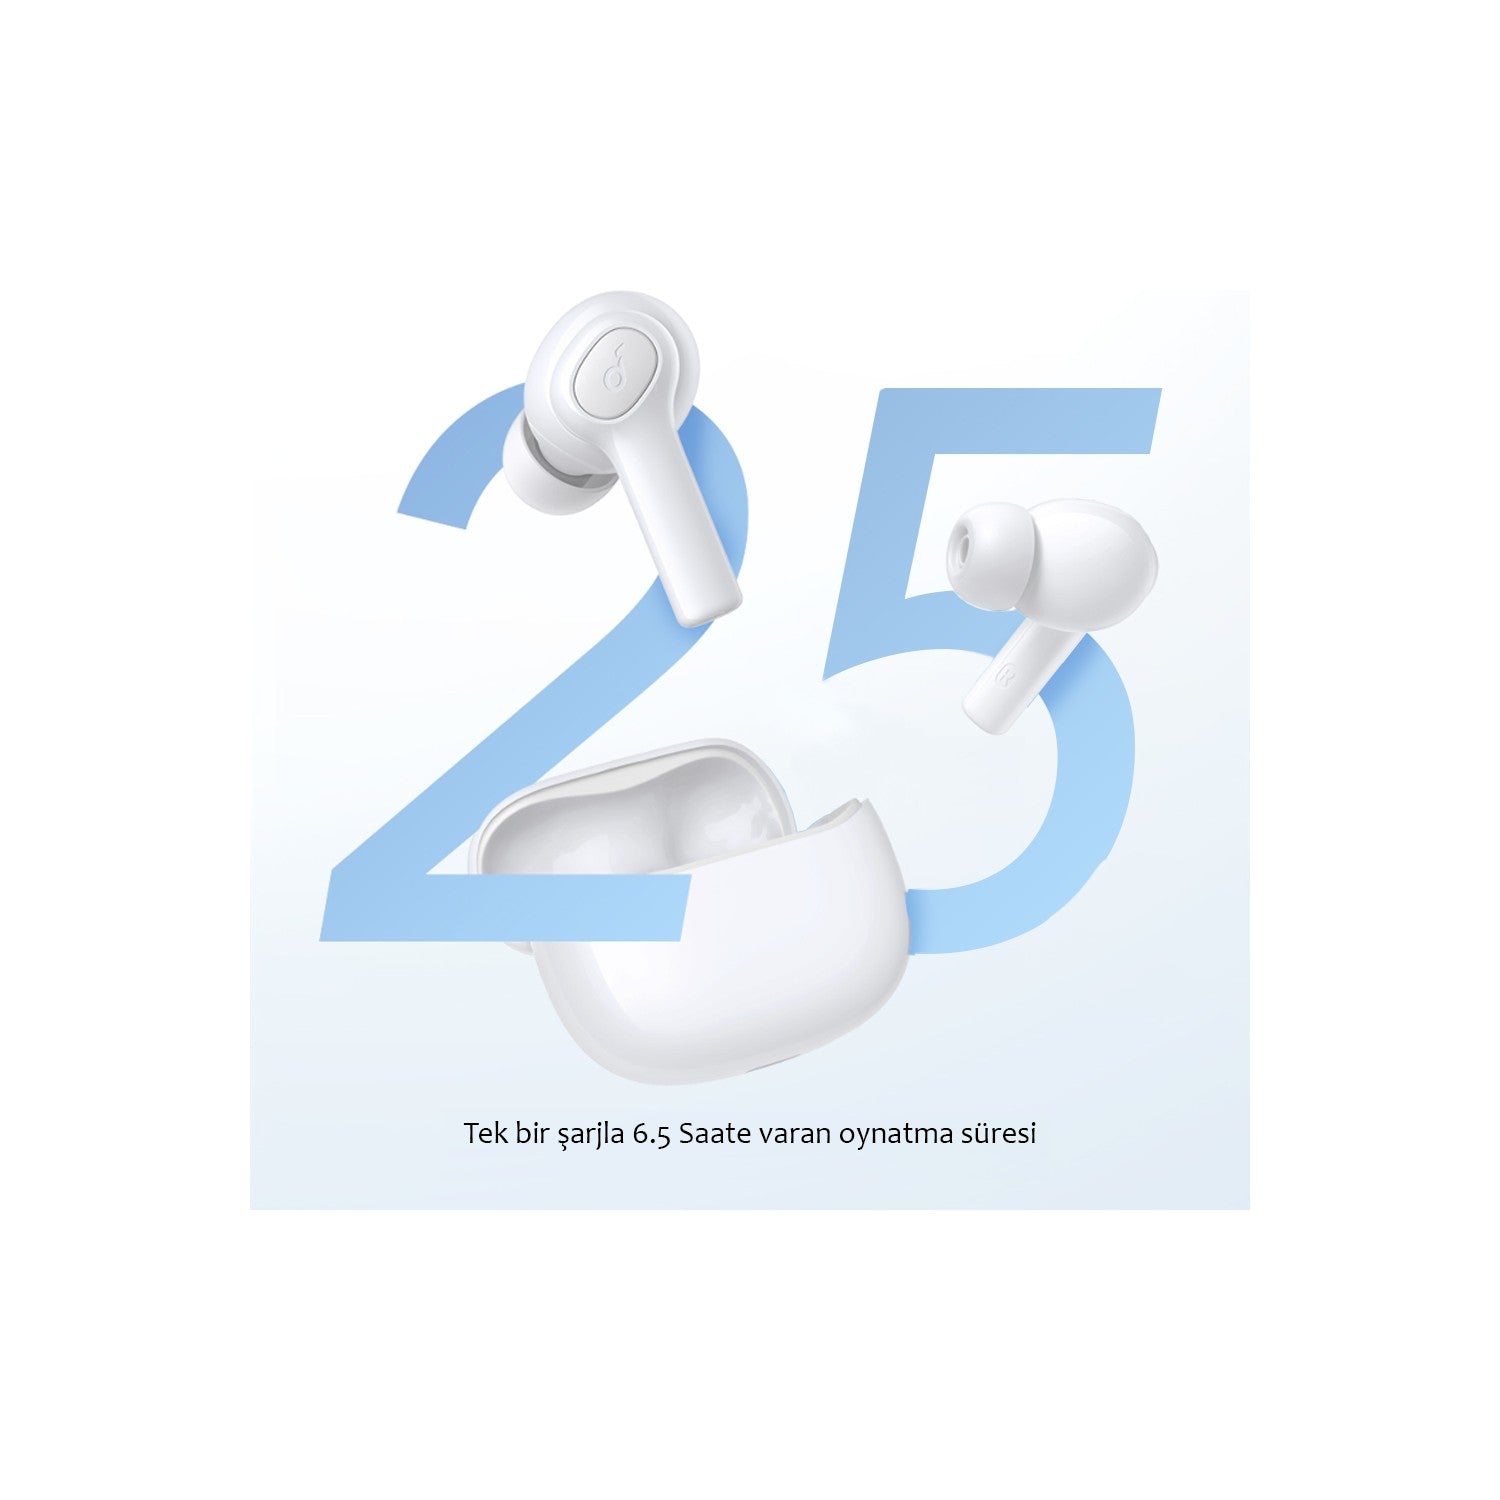 Anker SoundCore R100 TWS Bluetooth Headphones - IPX5 Water Resistant - White